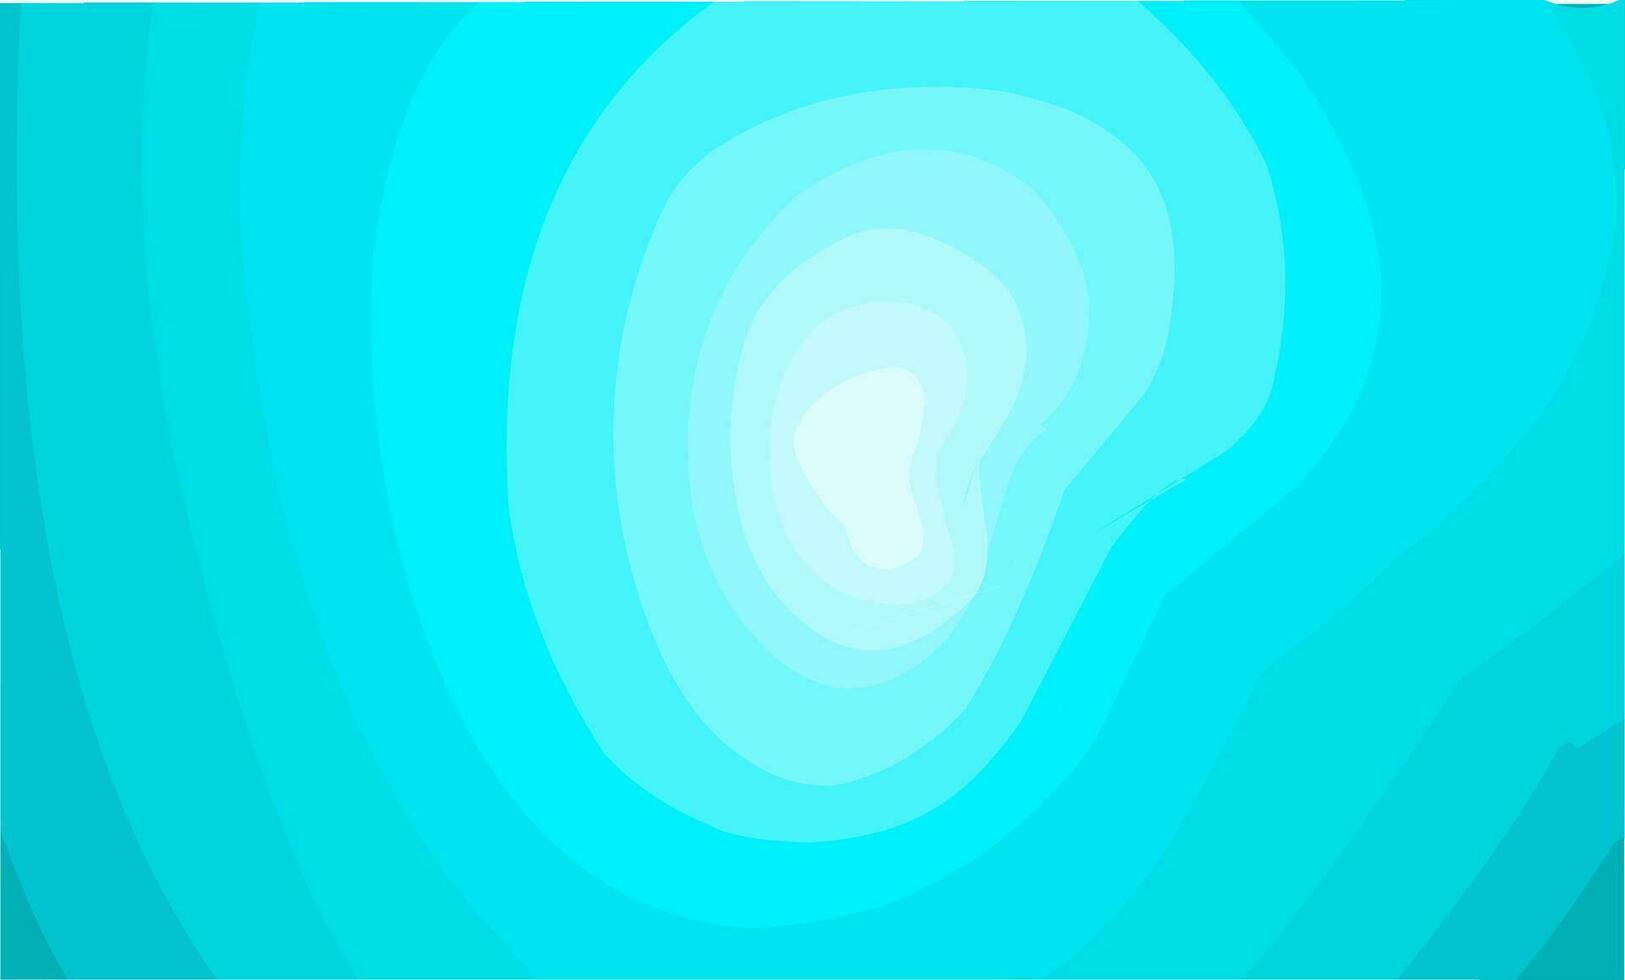 abstract blauw golven structuur helling achtergrond vector